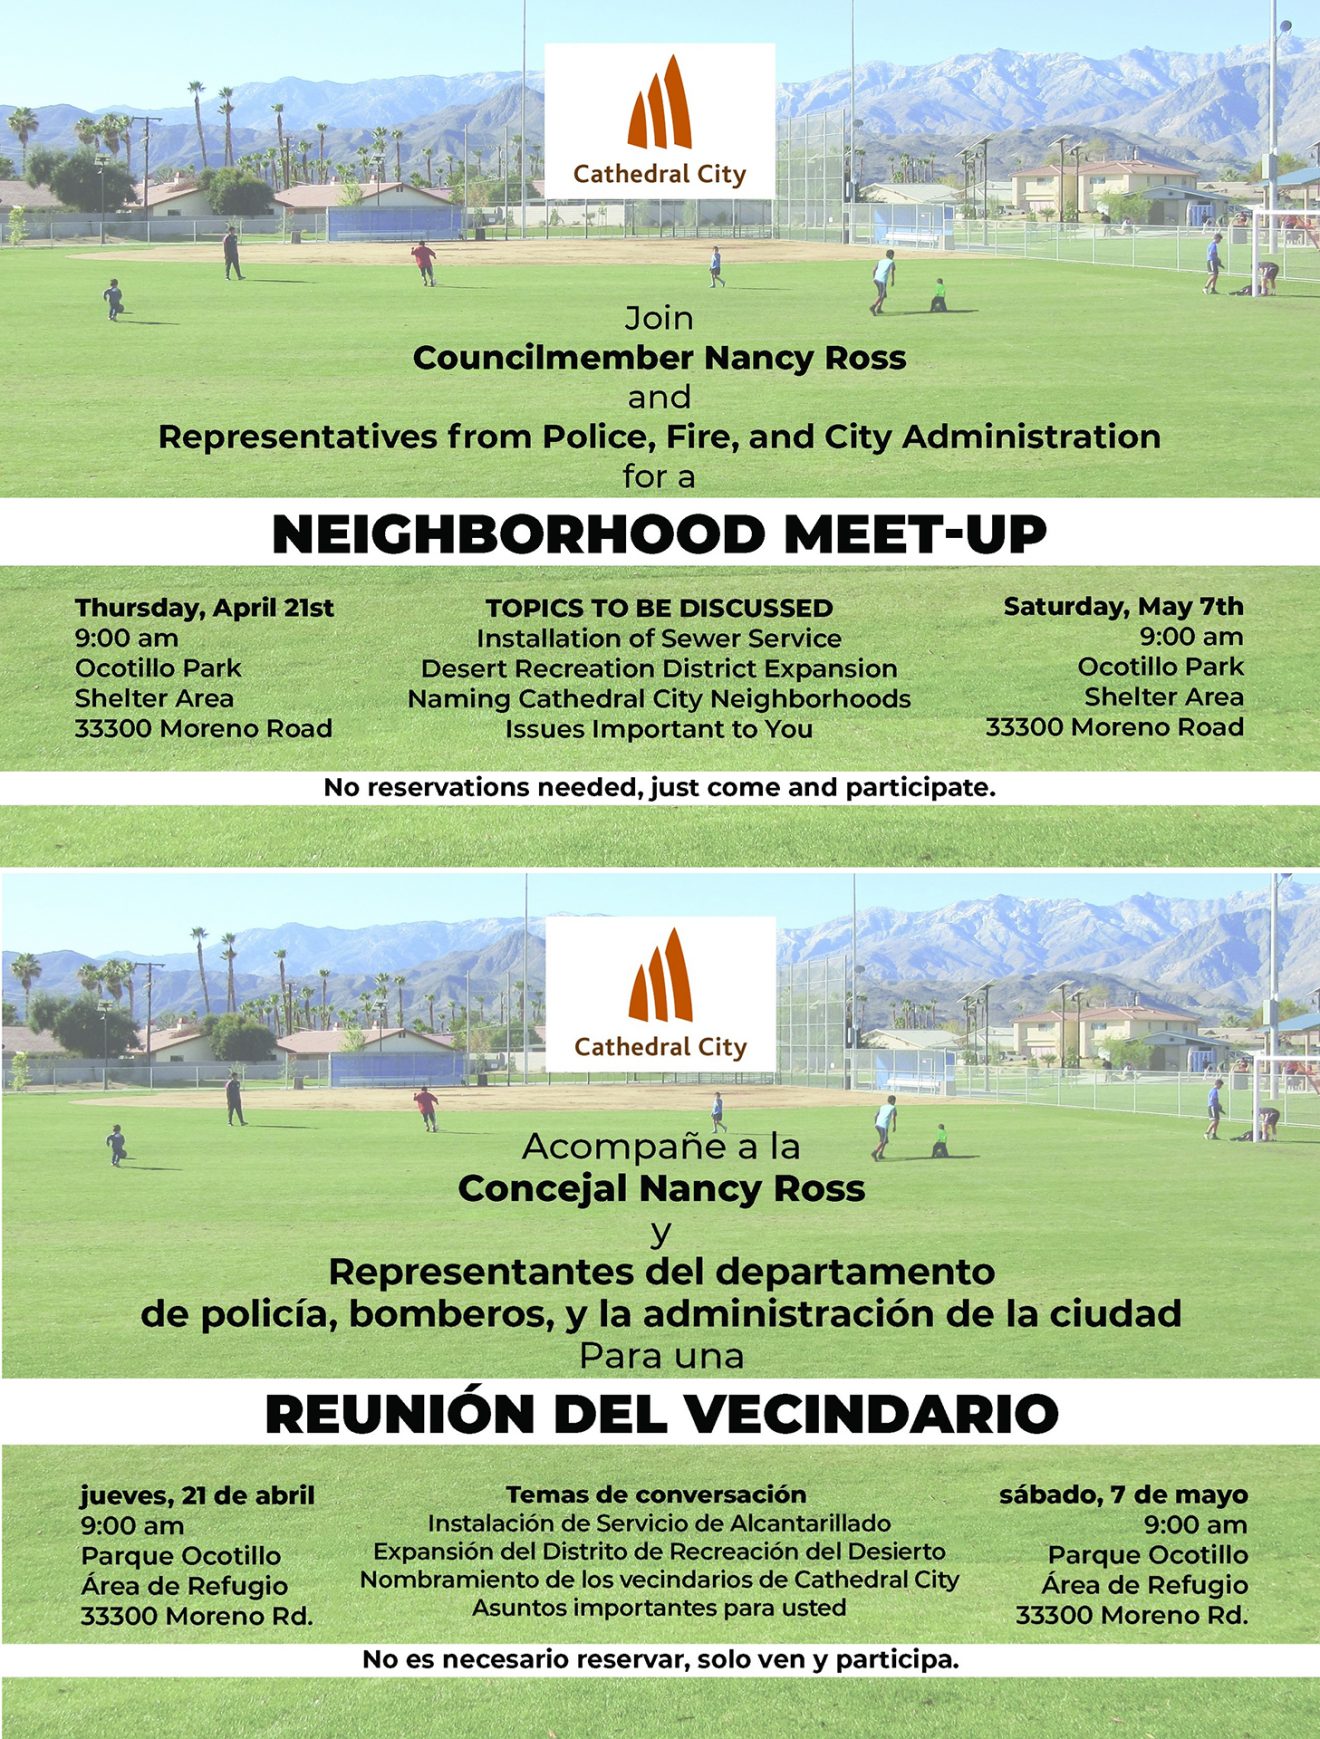 Ocotillo Park Neighborhood Meet-Up Happens this Saturday